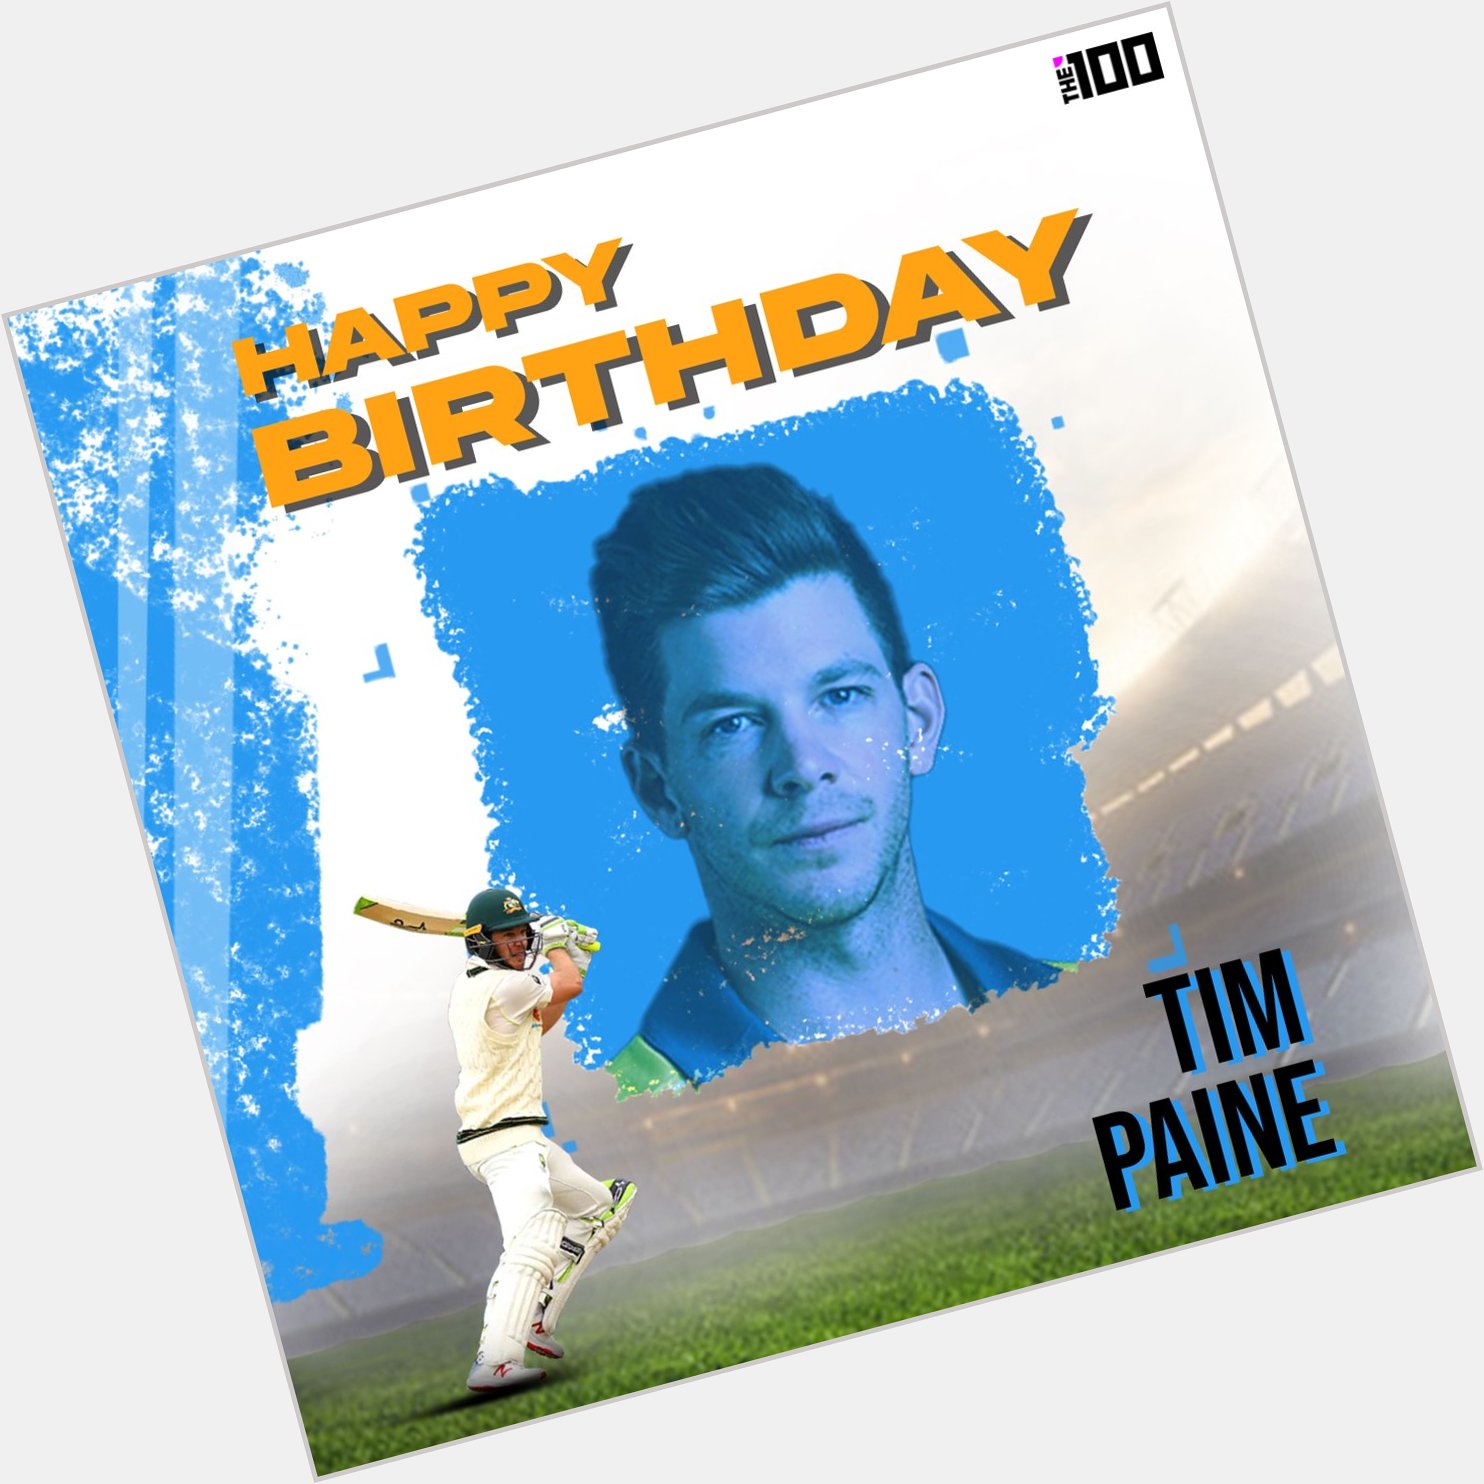 Wishing a very Happy Birthday to former Australia captain Tim Paine  